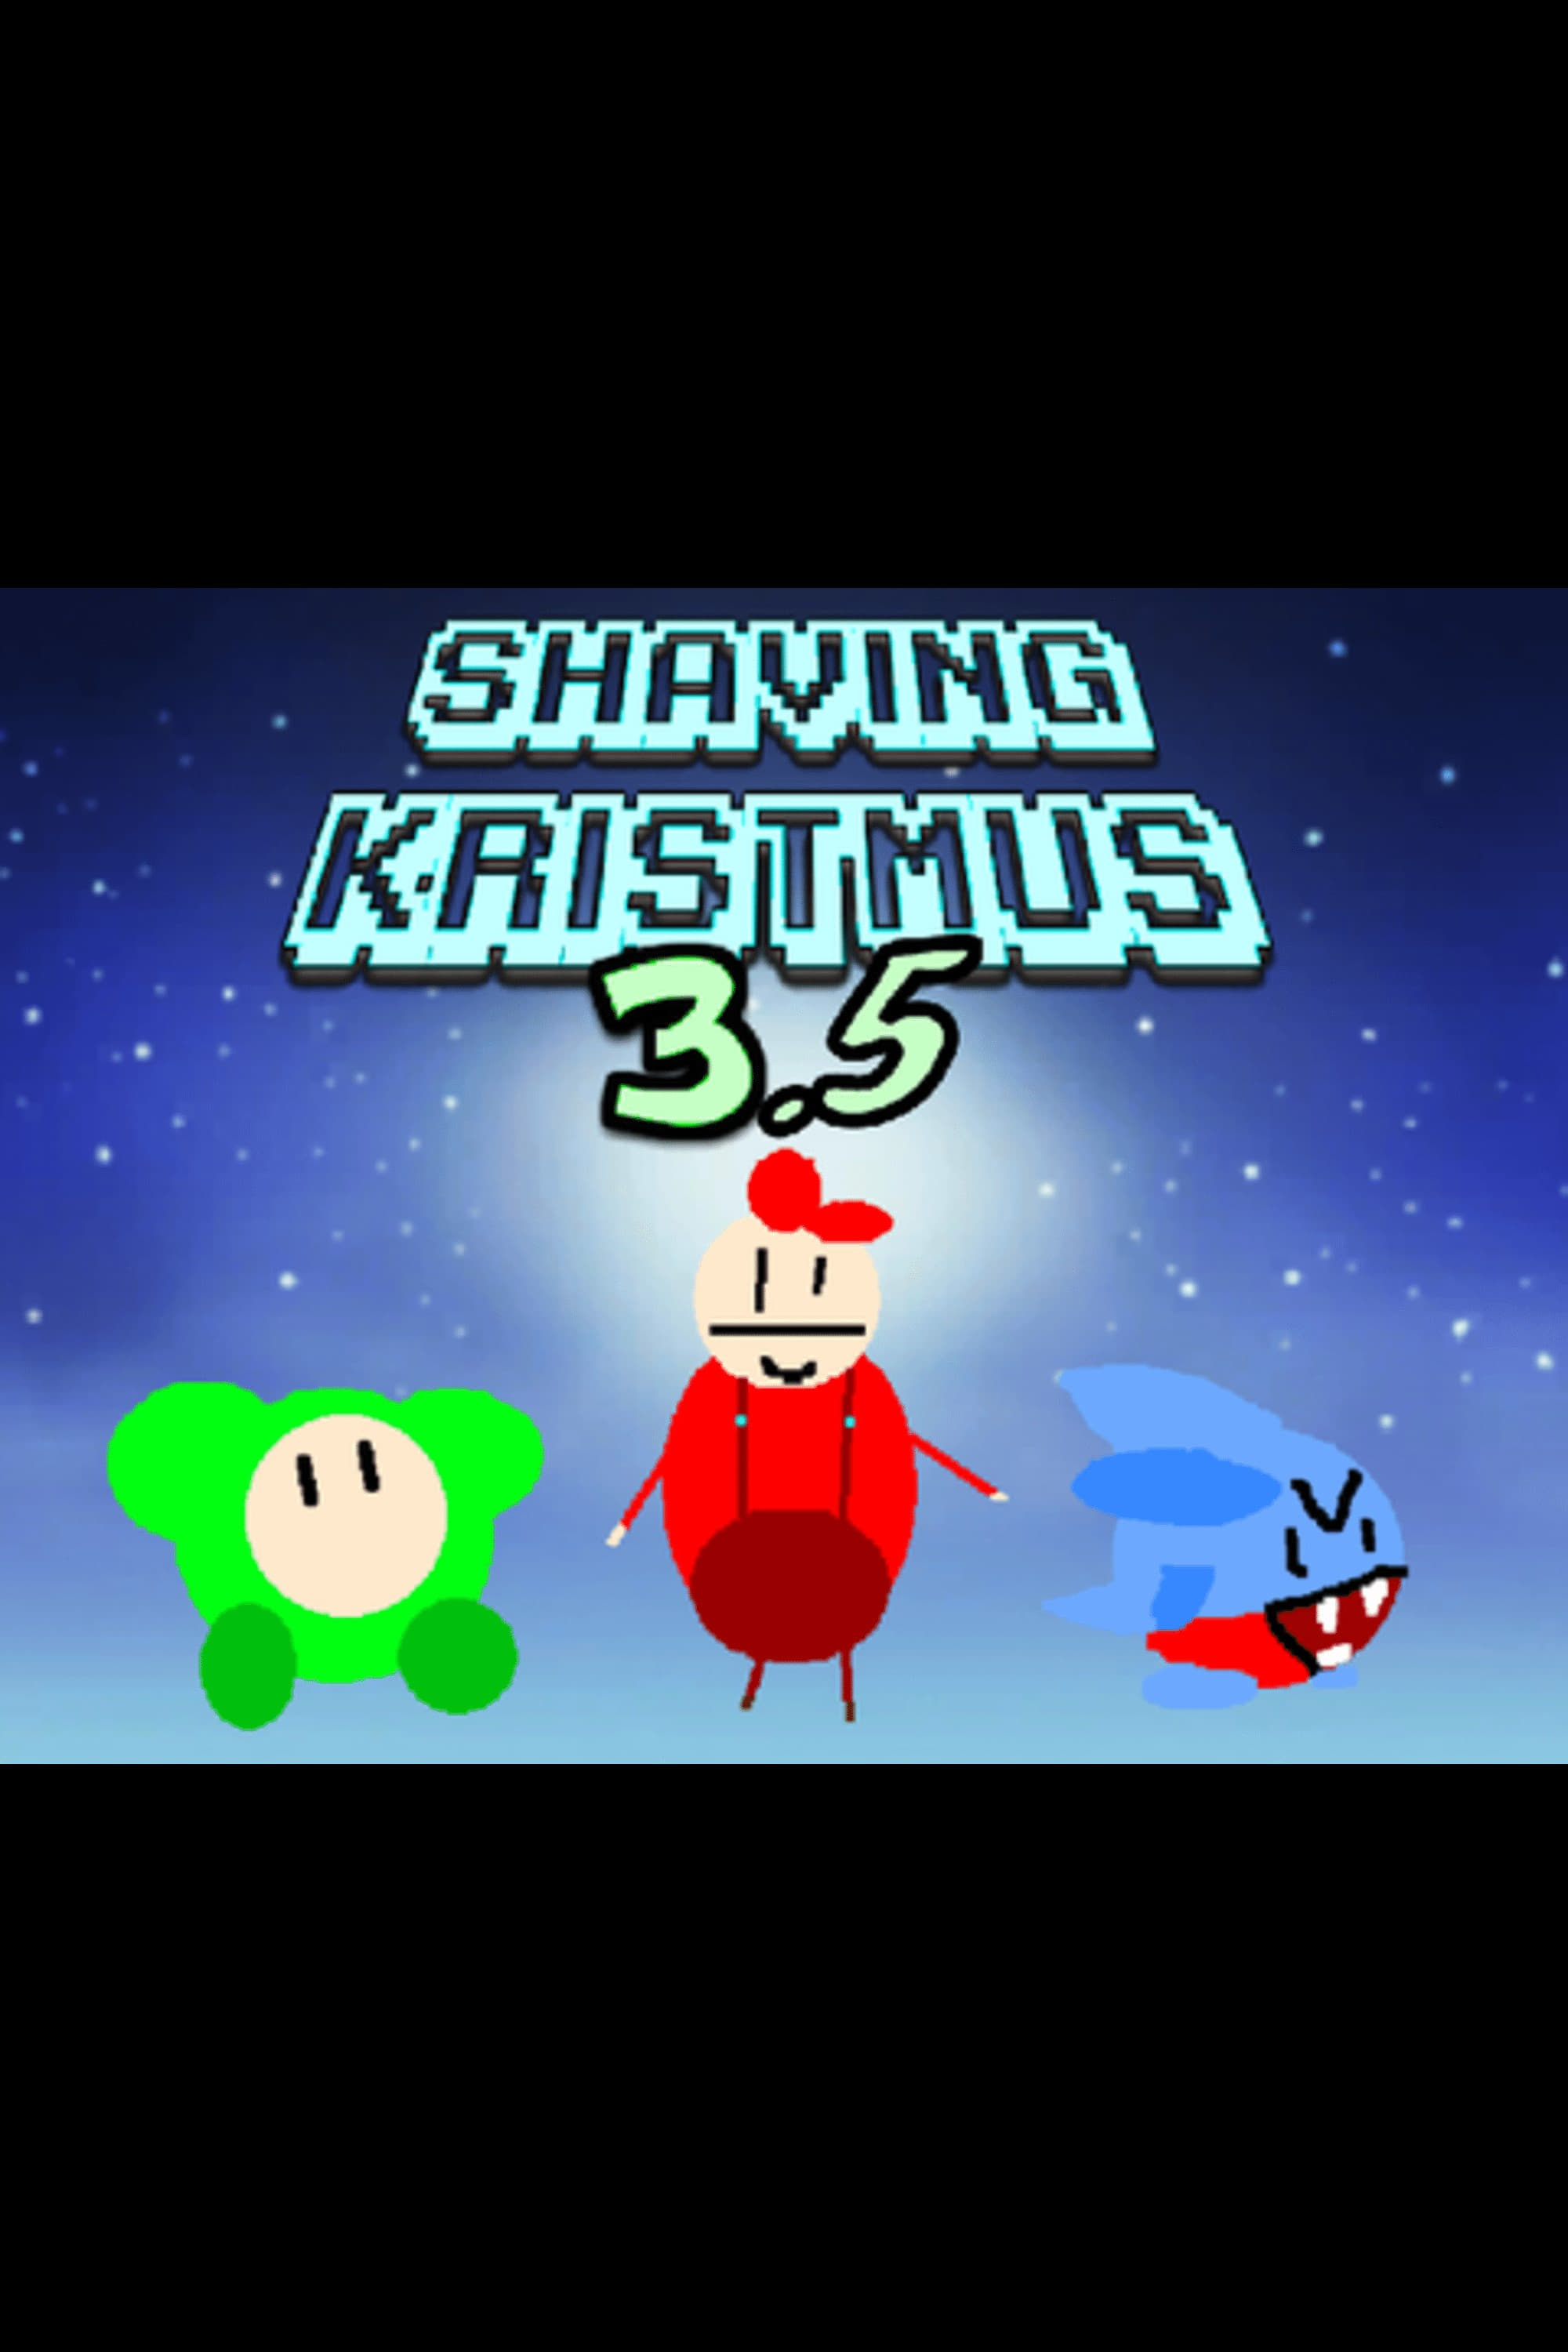 Shaving Kristmus 3.5